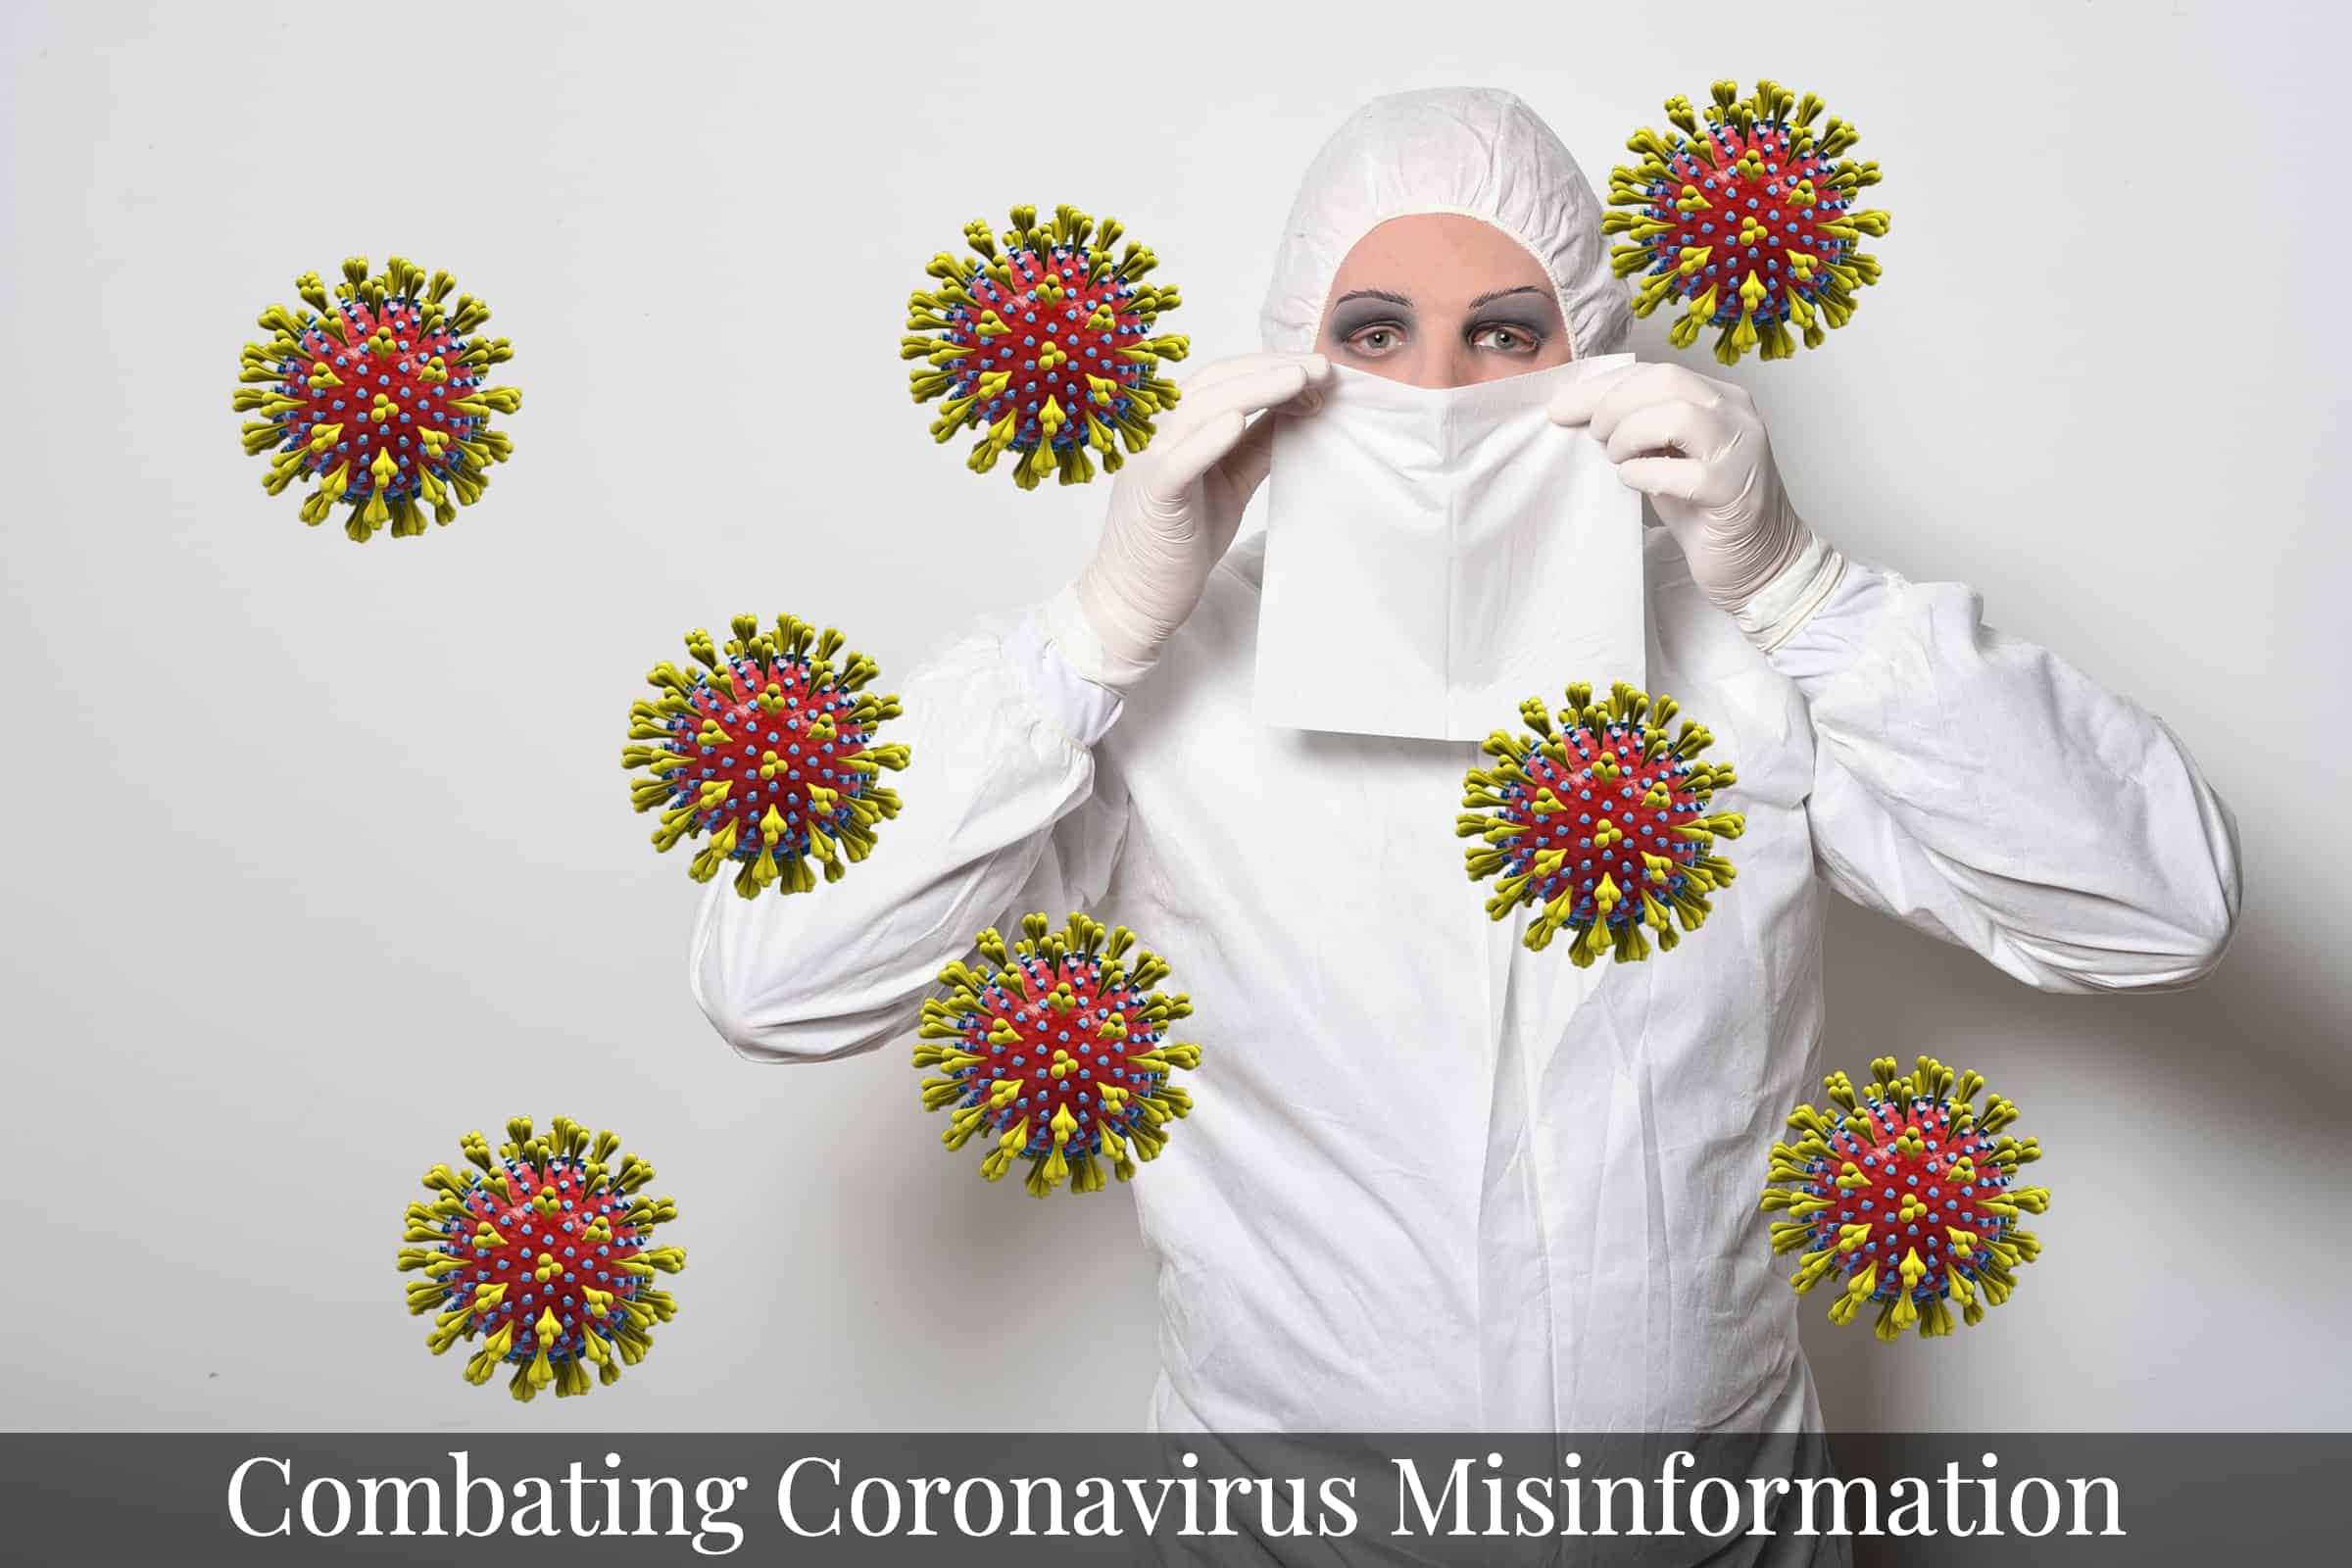 Combating COVID-19 Coronavirus Misinformation